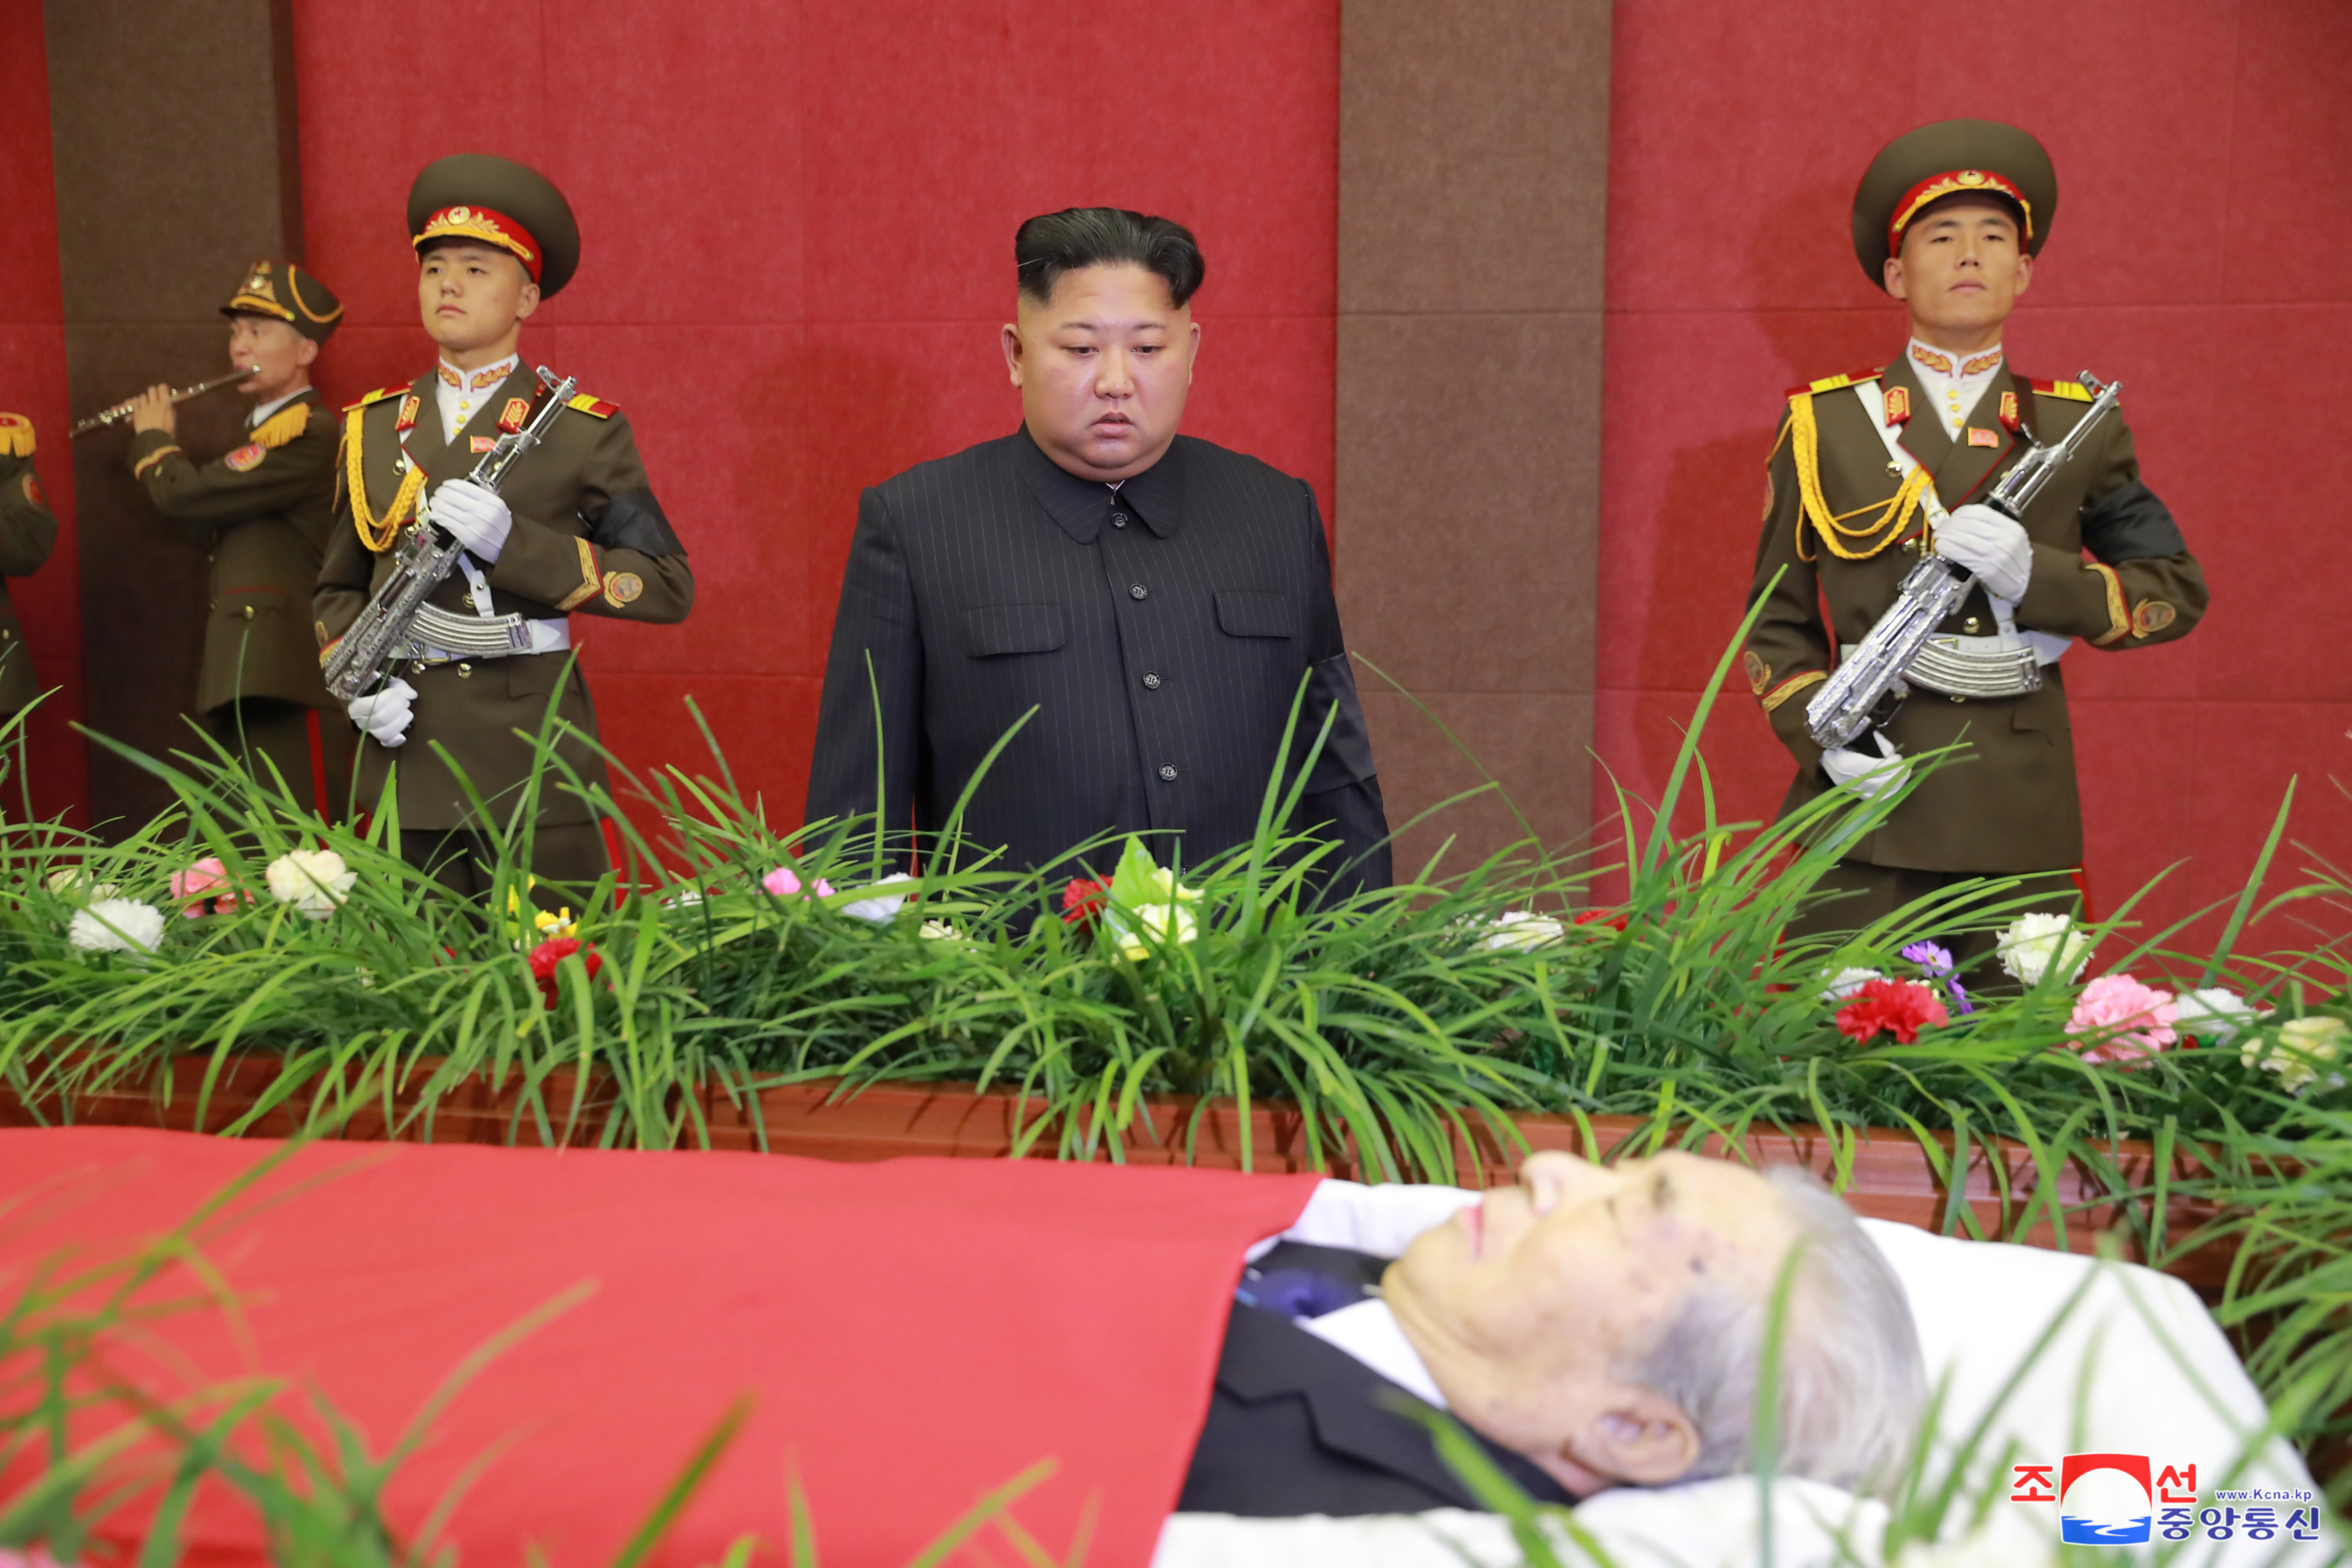 Kim Jong Un Attends Ju Kyu Chang's Wake | North Korea Leadership Watch